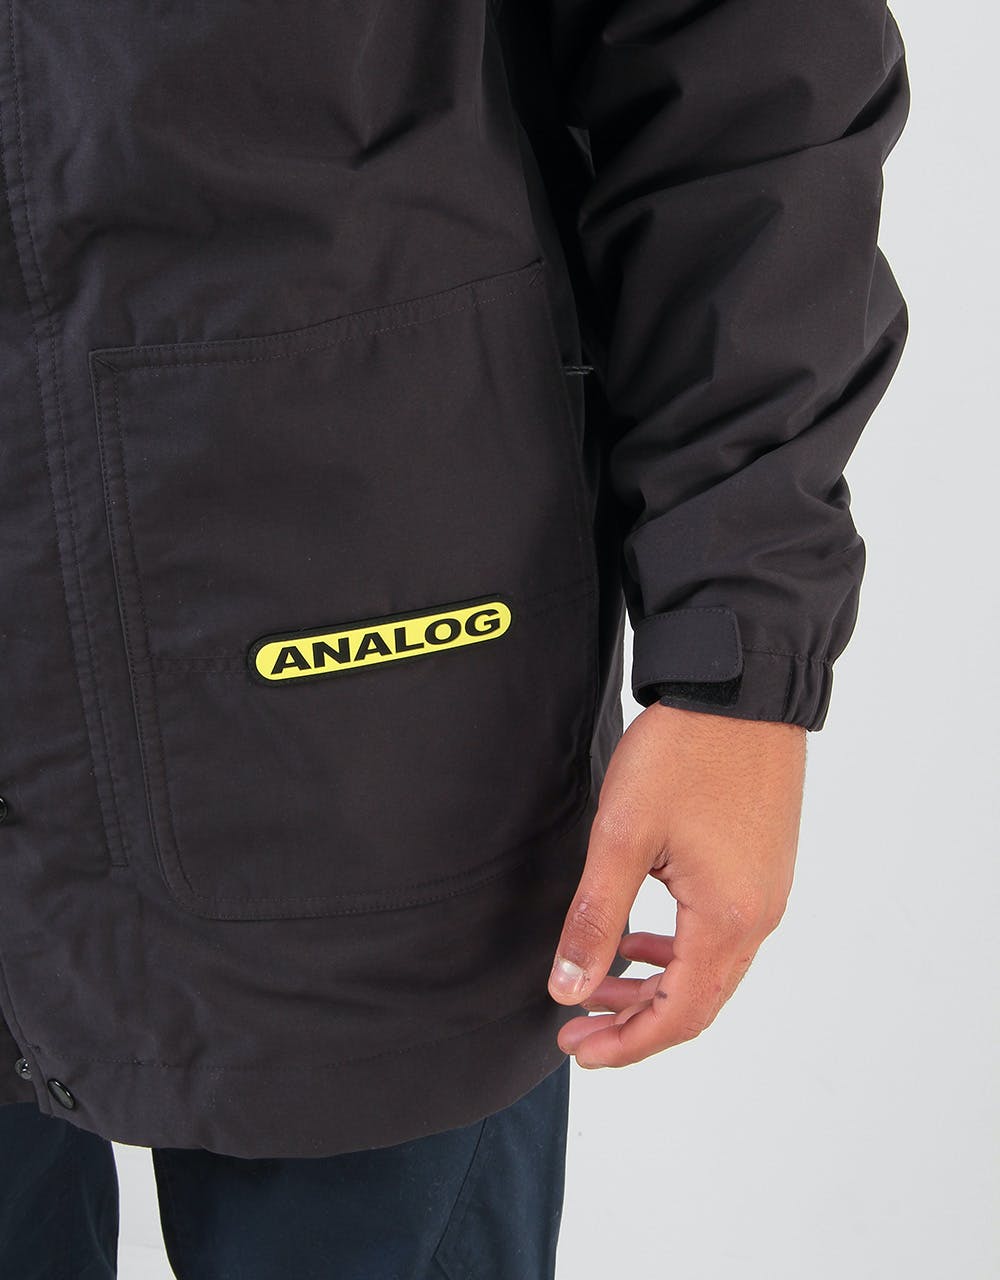 Analog Solitary 2020 Snowboard Jacket - True Black